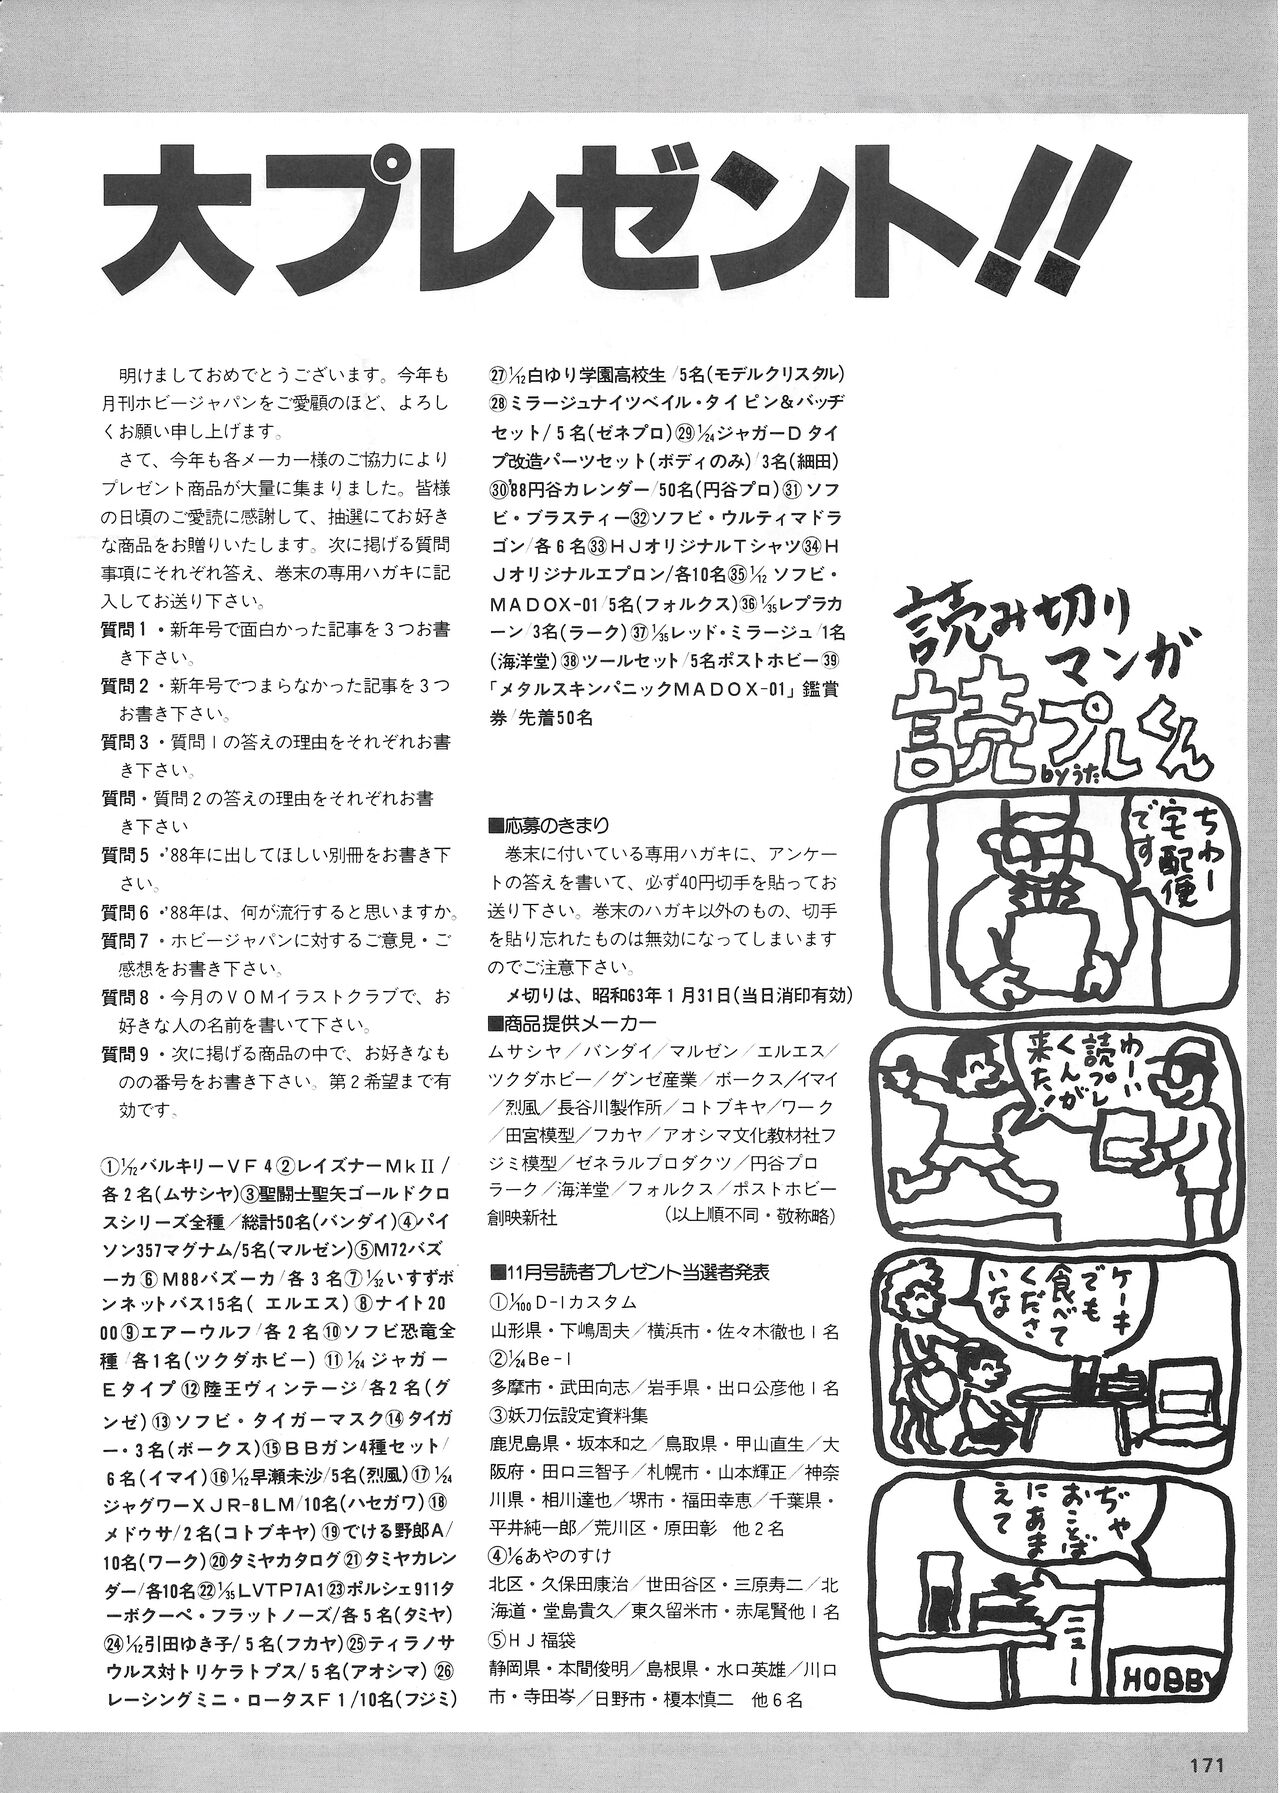 Hobby Japan Magazine 1988 Issue No.224 170